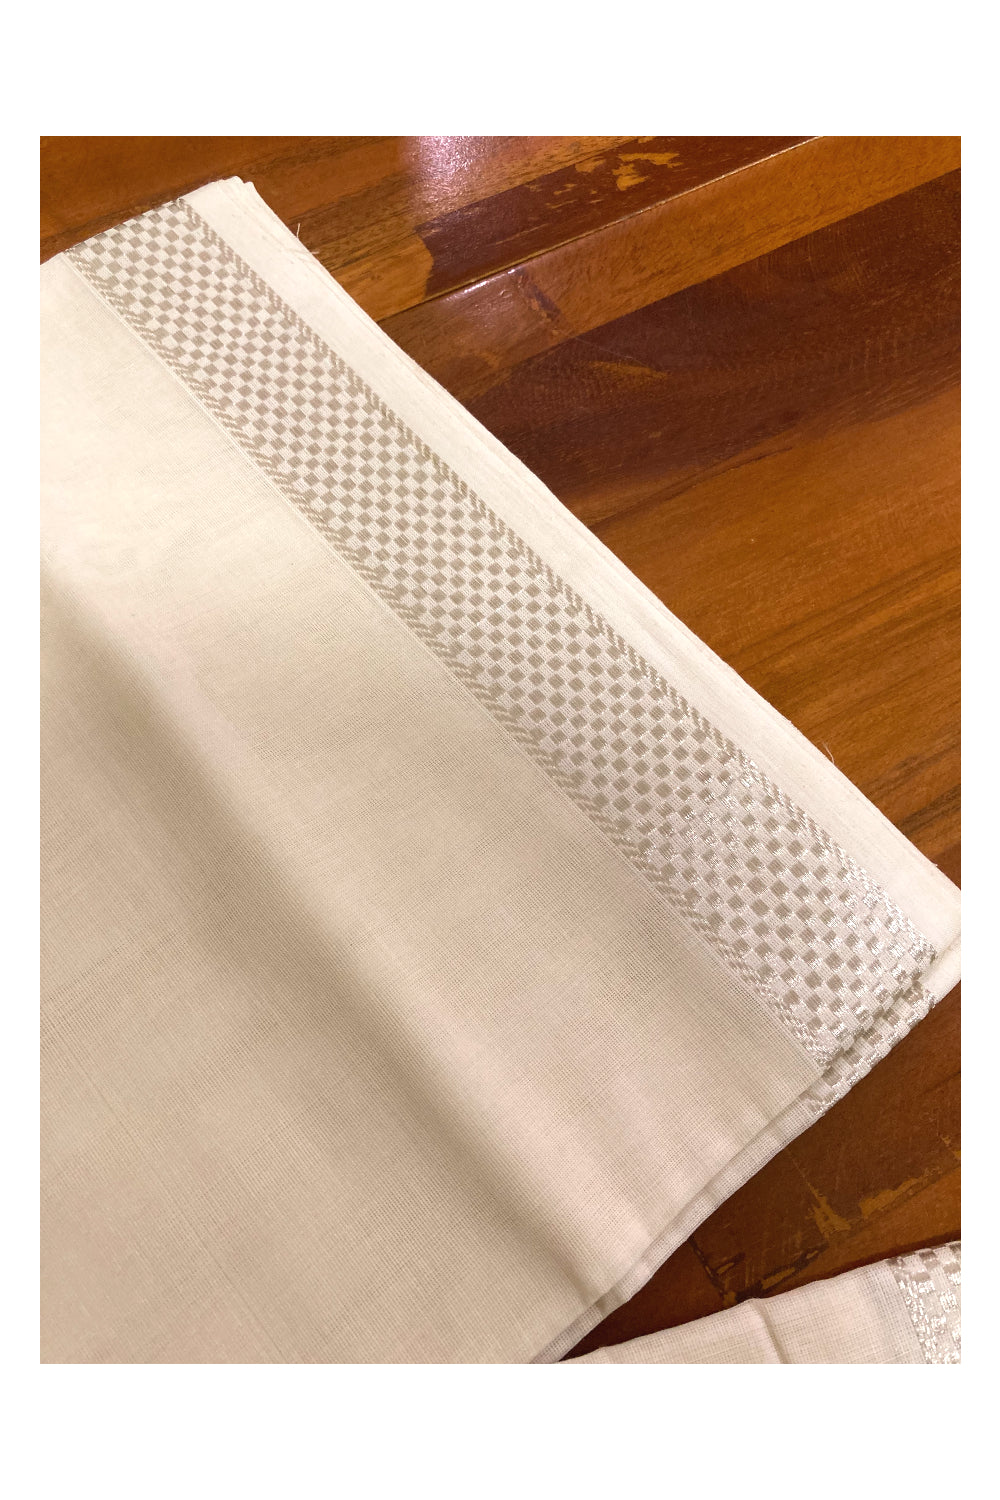 Southloom Premium Handloom Pure Cotton Mundu with Blue and Silver Kasavu Border (South Indian Kerala Dhoti)